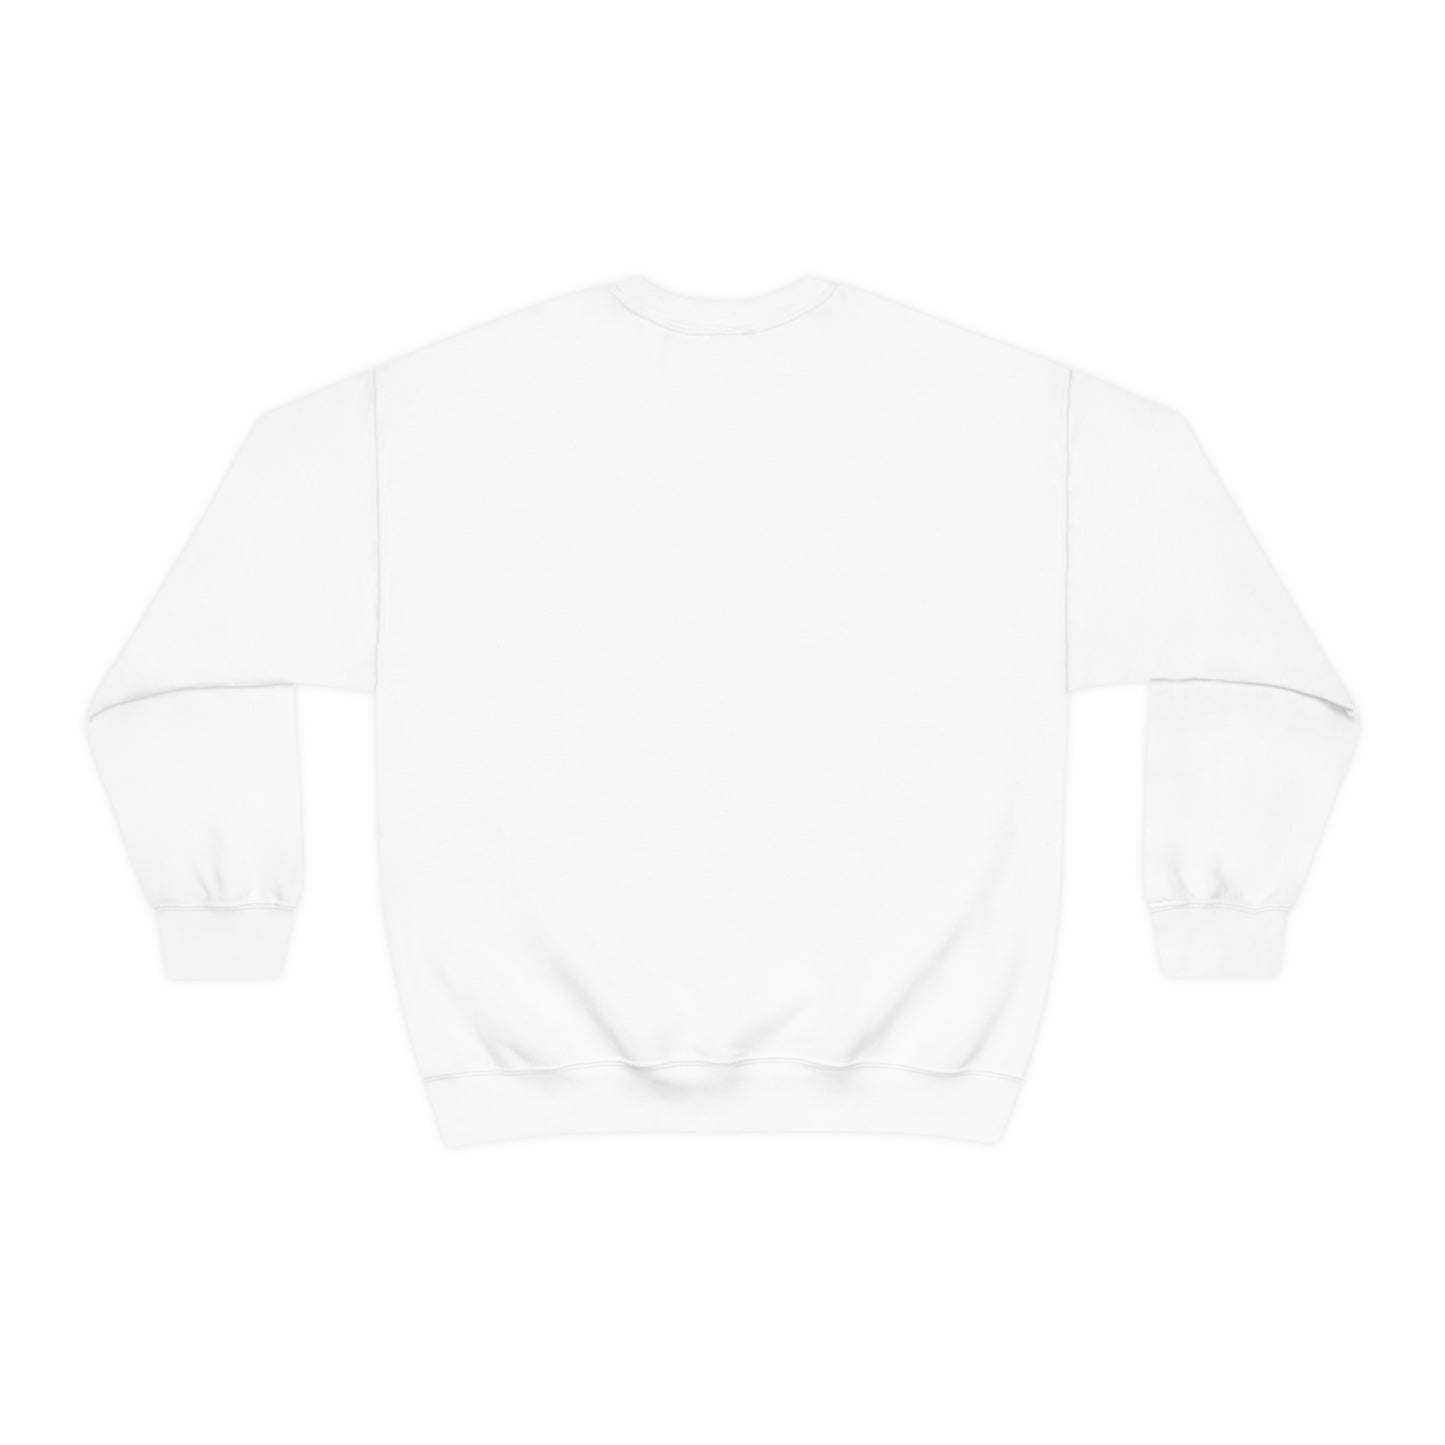 Not Perfect But Still Chosen By God Unisex Heavy Blend™ Crewneck Sweatshirt